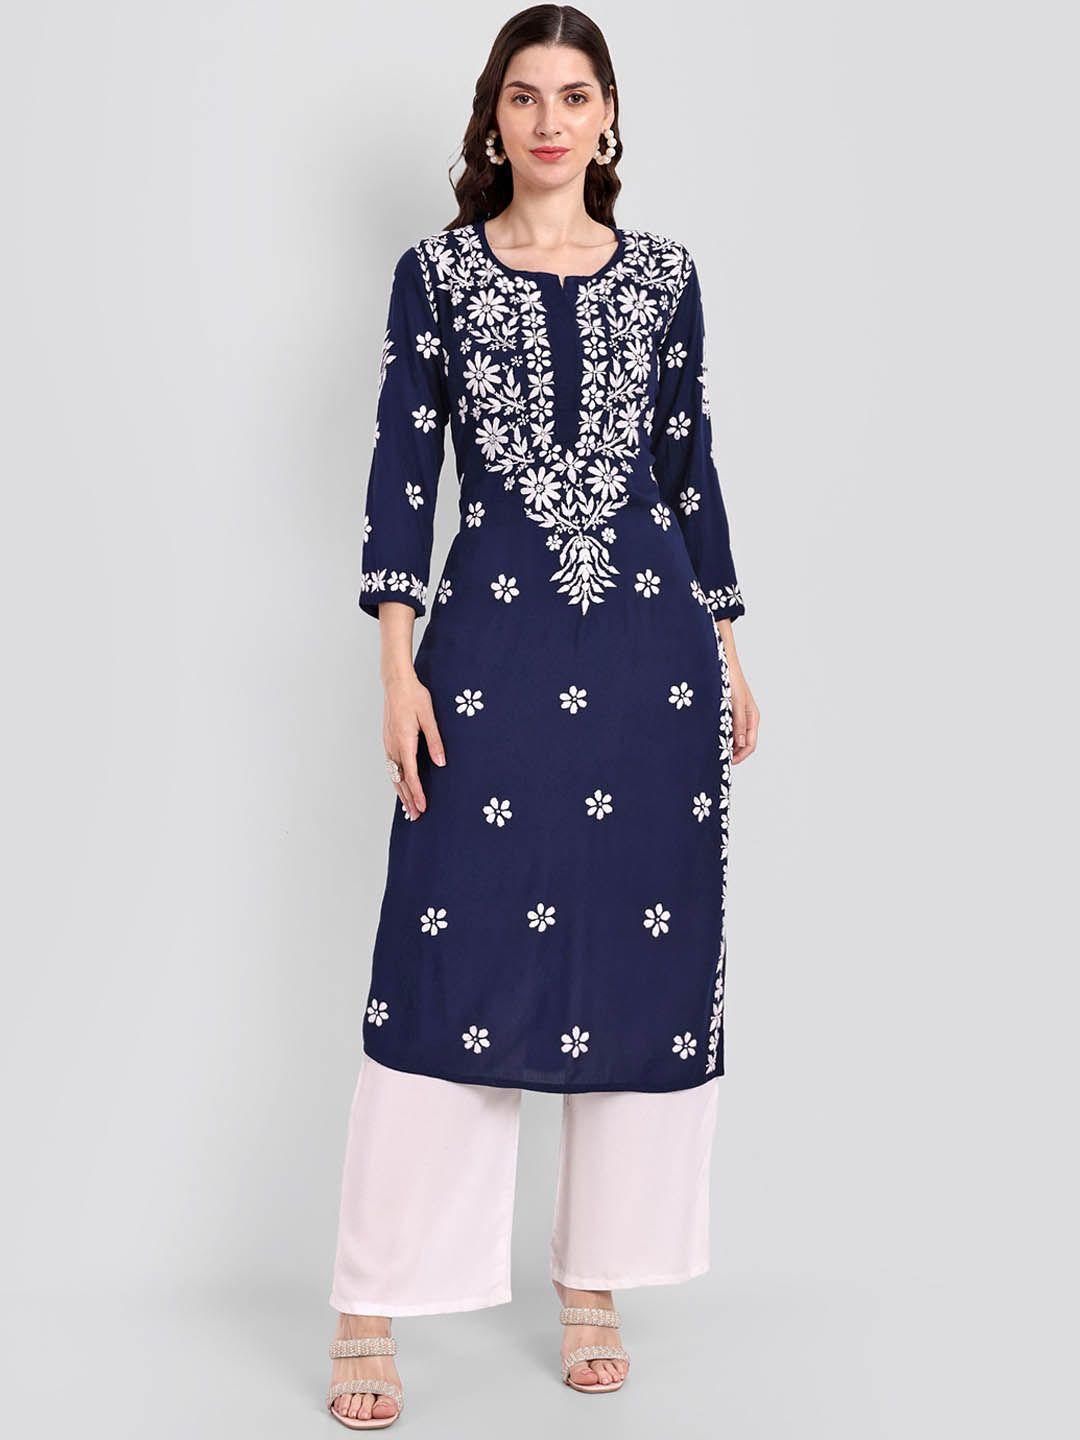 seva-chikan-women-navy-blue-ethnic-motifs-printed-thread-work-floral-handloom-kurta